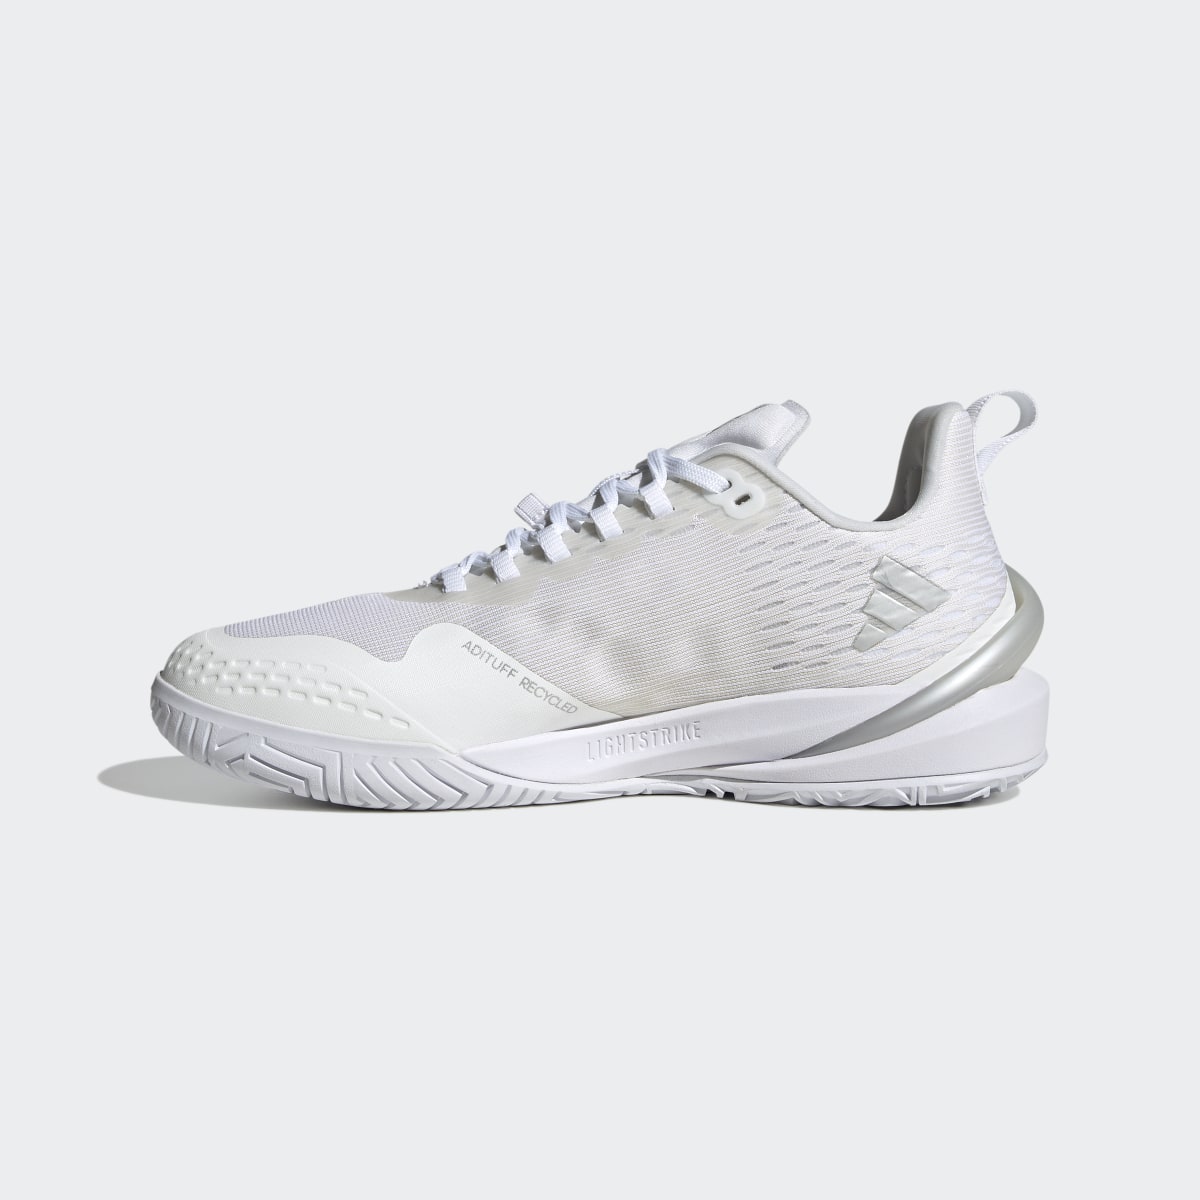 Adidas adizero Cybersonic Tenis Ayakkabısı. 10